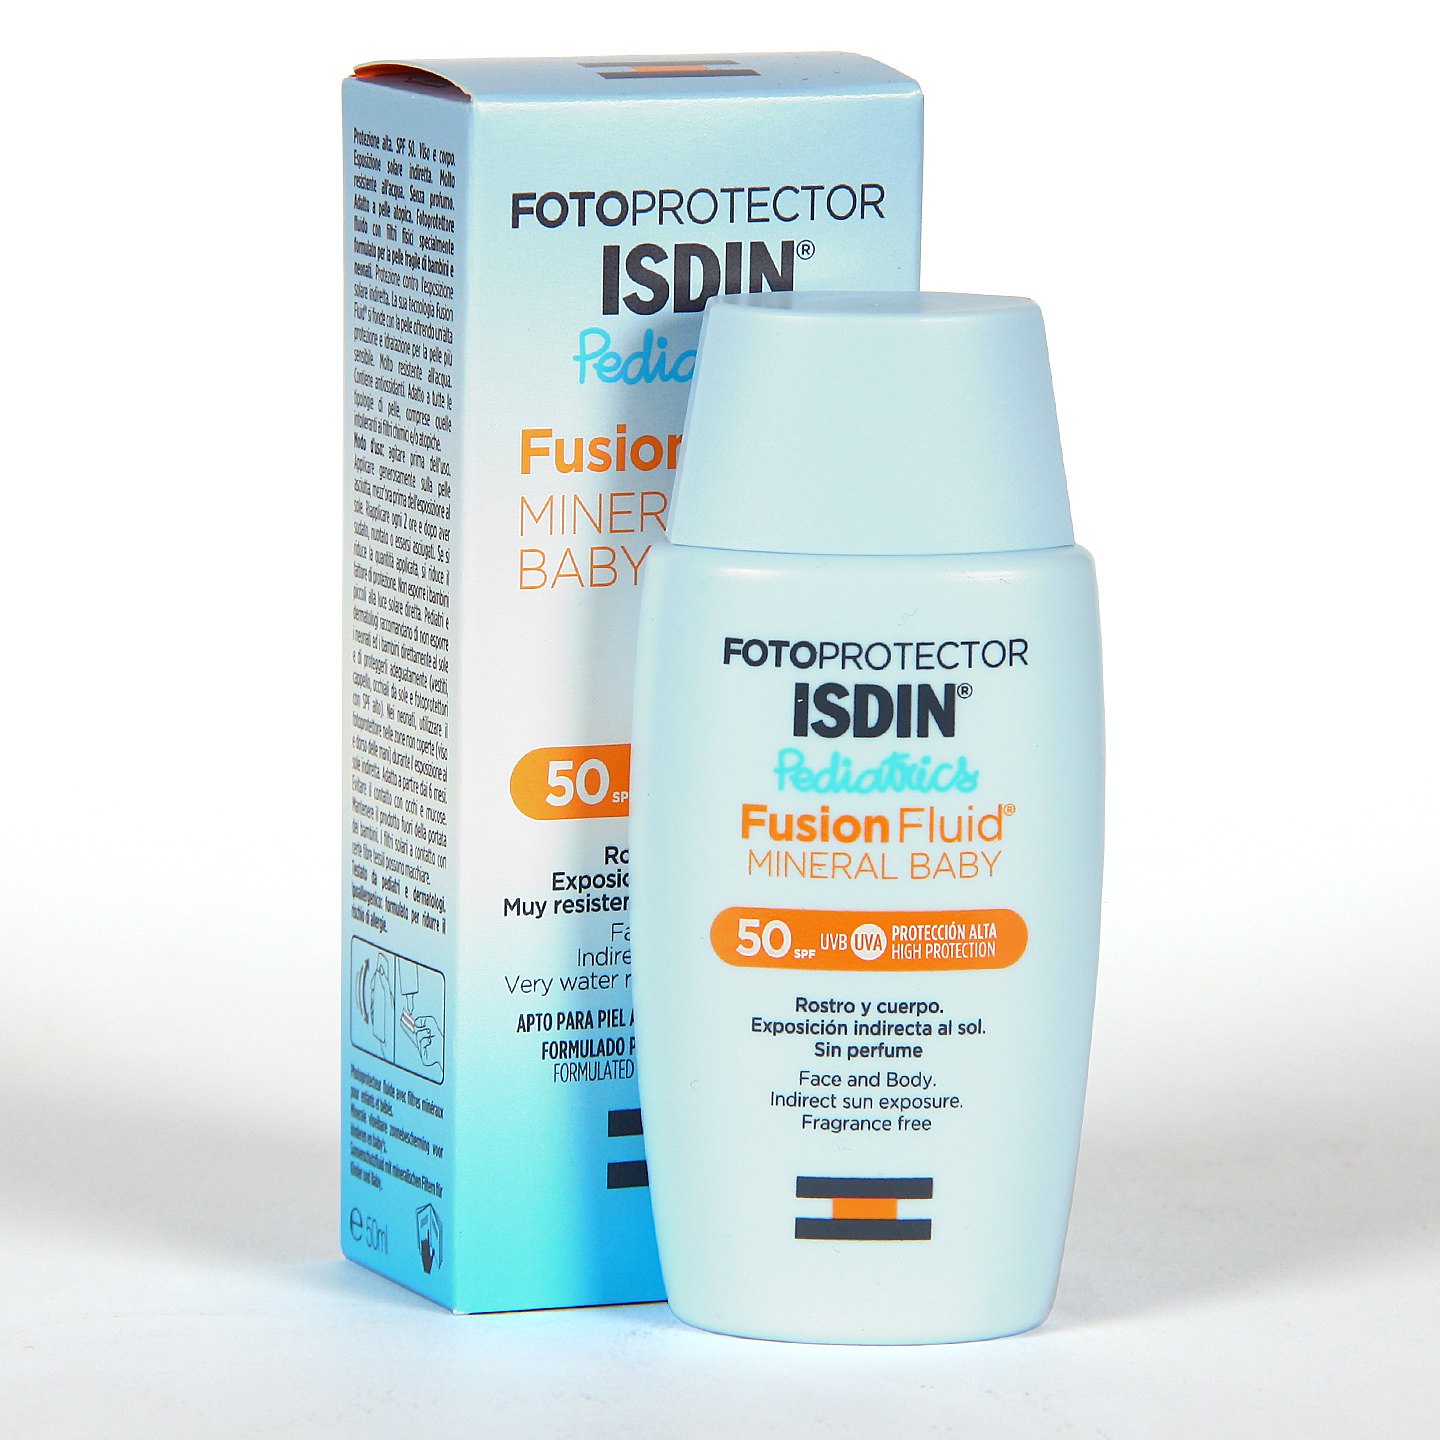 ISDIN  Fotoprotector Solar Pediatrics Fusion Fluid Mineral Baby SPF50